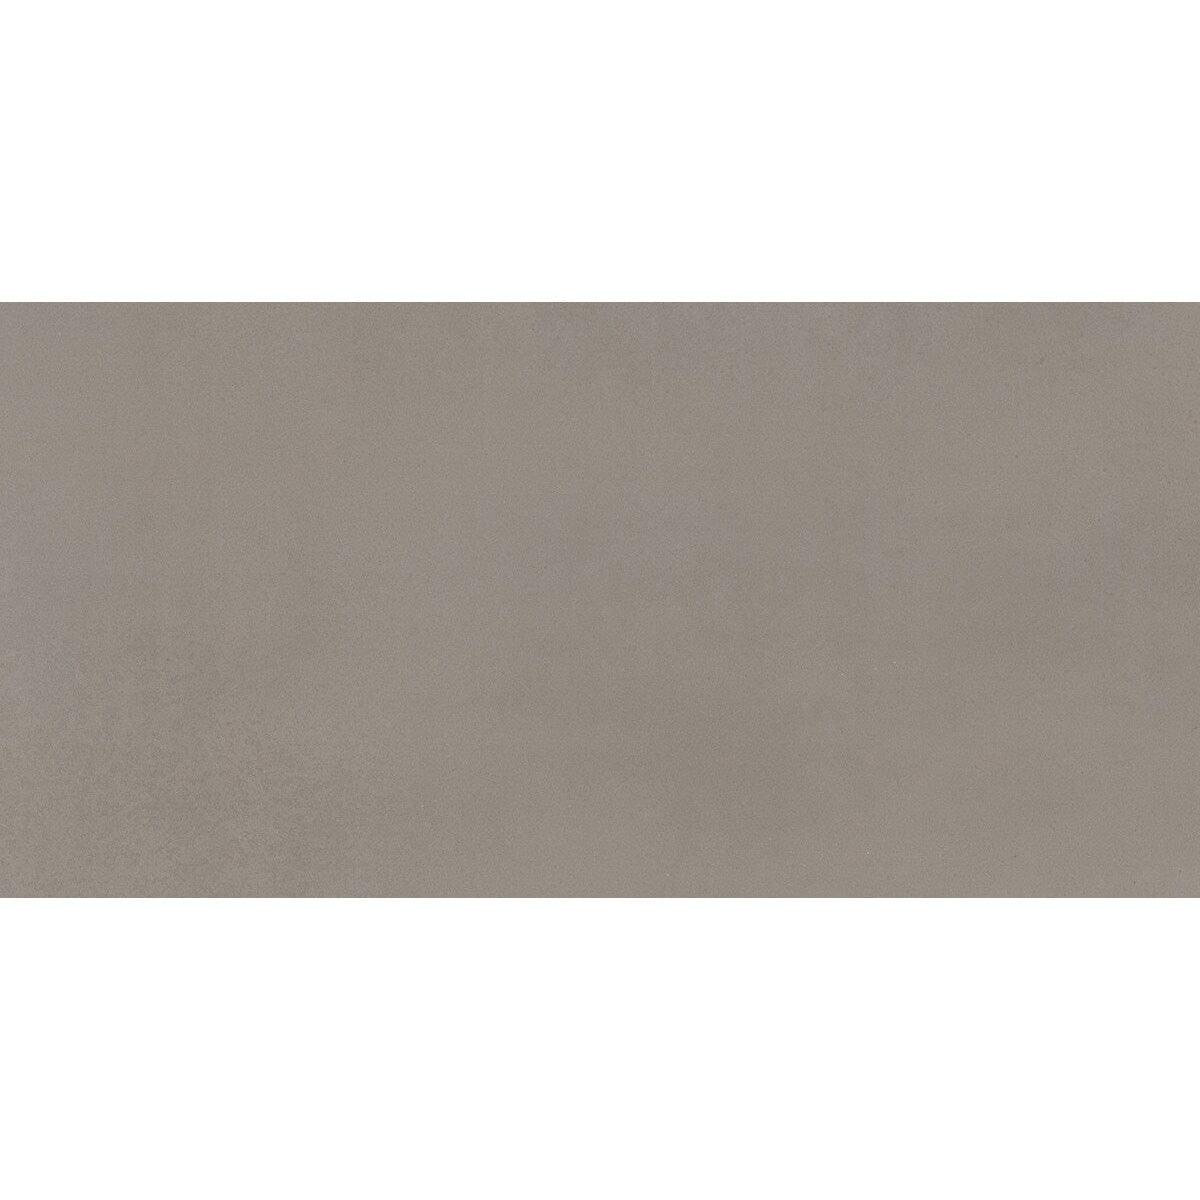 American Olean - Neoconcrete 12 in. x 24 in. Porcelain Tile - Medium Gray (Matte)